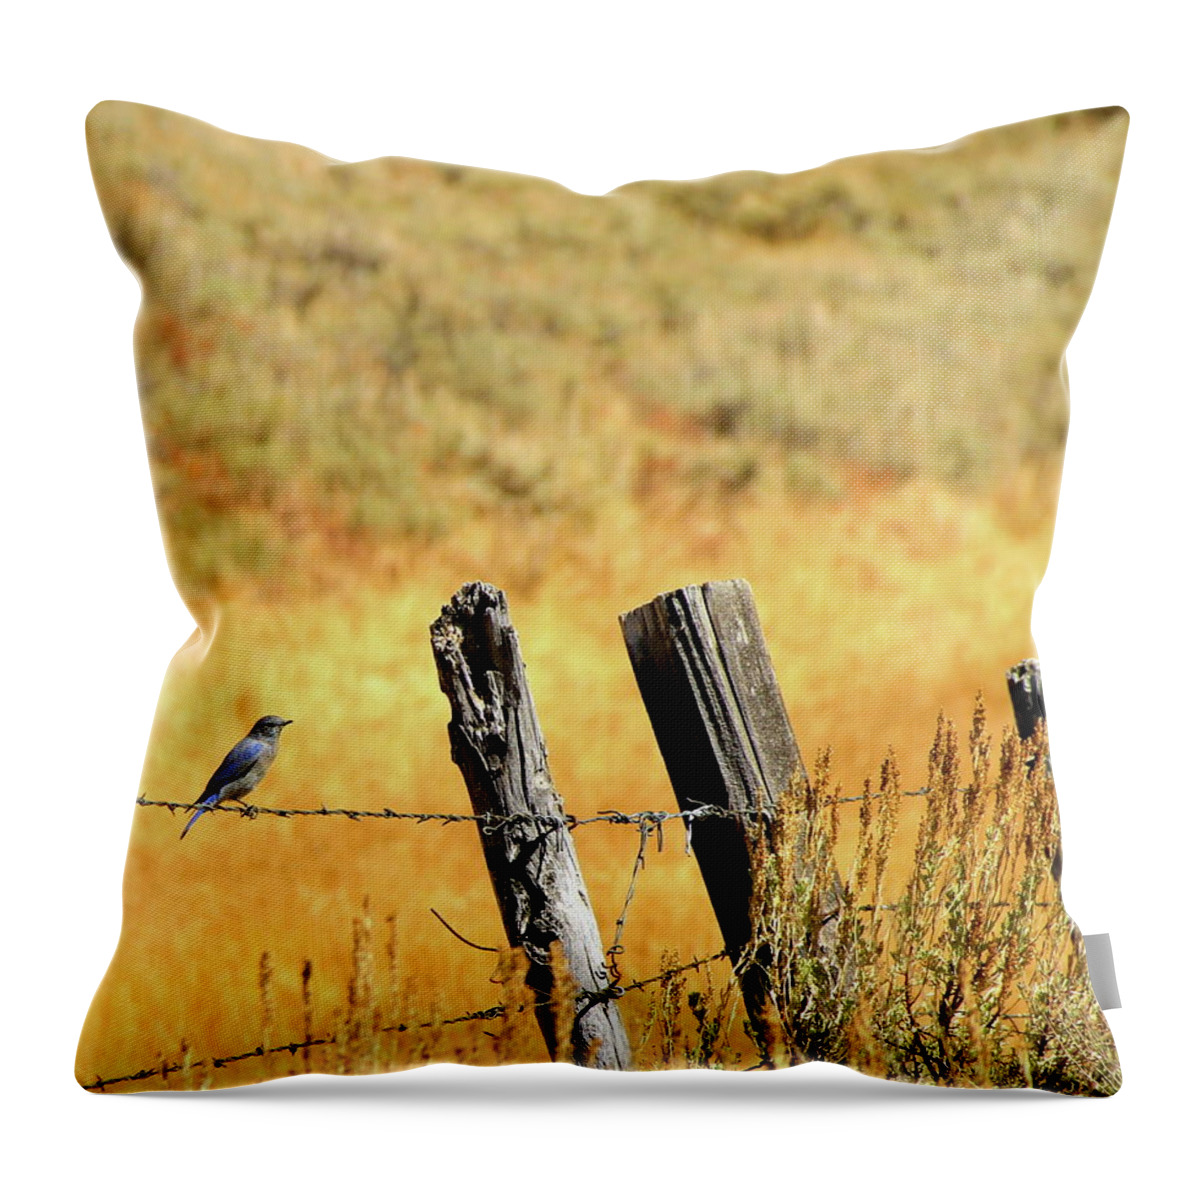 Blue Bird Throw Pillow featuring the photograph Rocky Mountain Blue Bird by Ed Riche